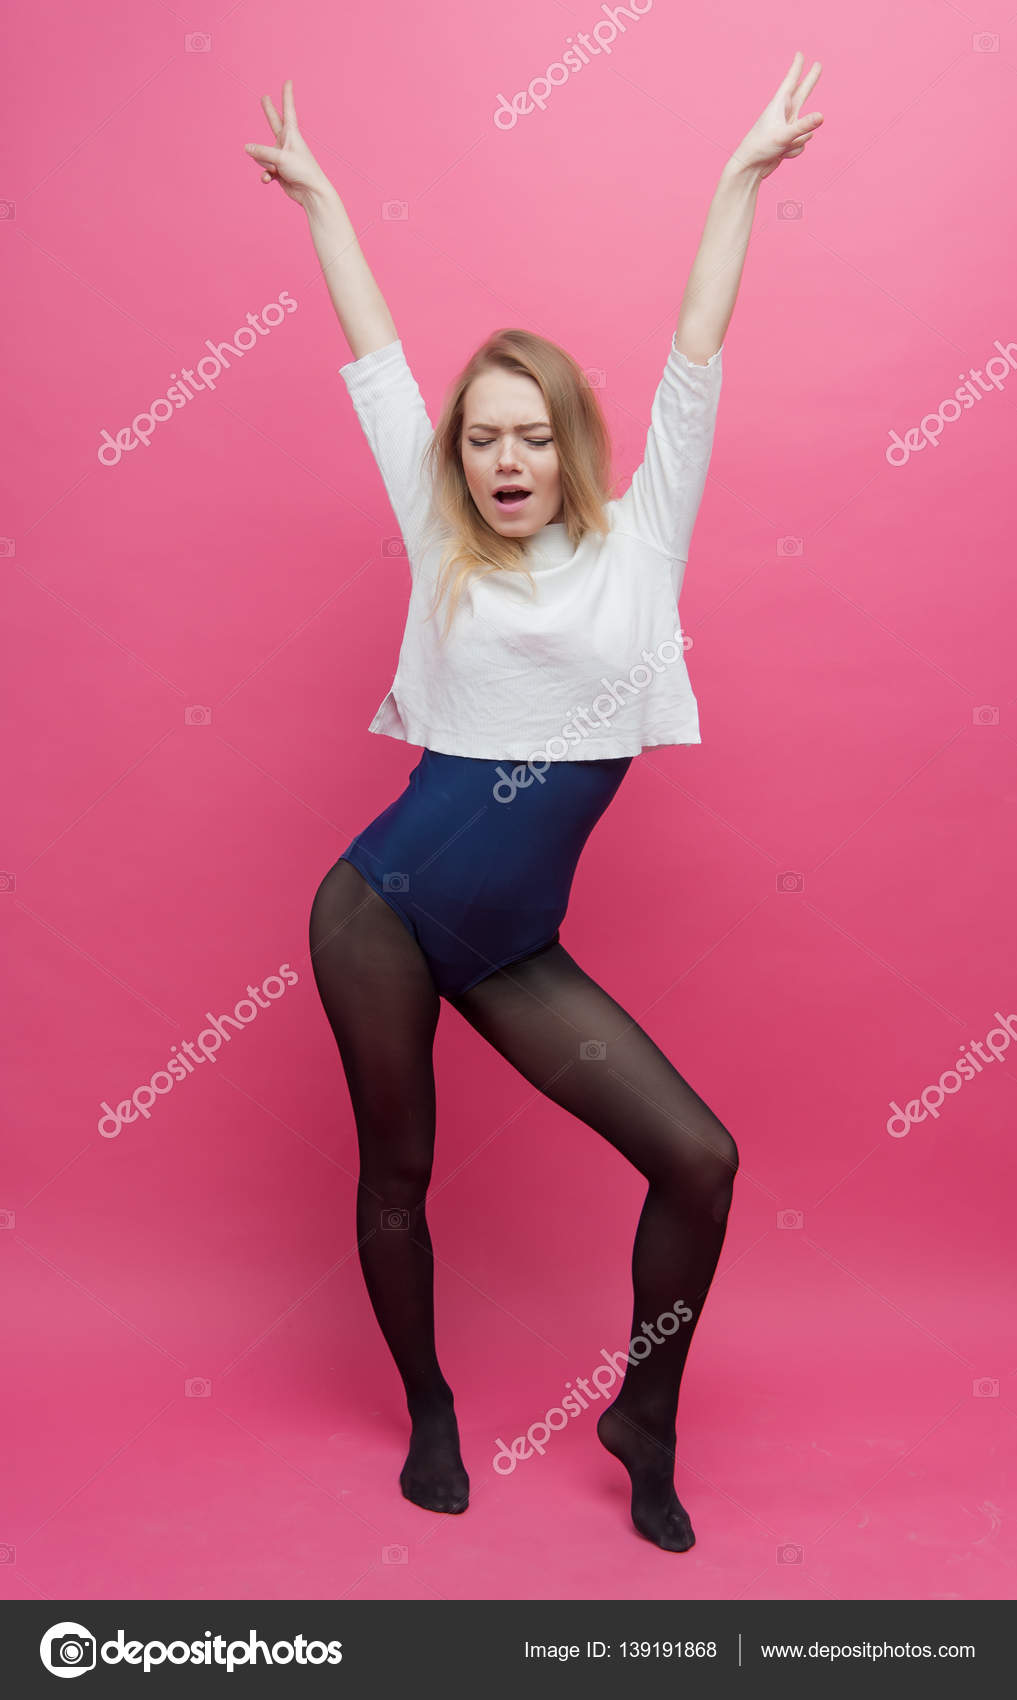 https://st3.depositphotos.com/1825733/13919/i/1600/depositphotos_139191868-stock-photo-girl-in-black-tights-dancing.jpg